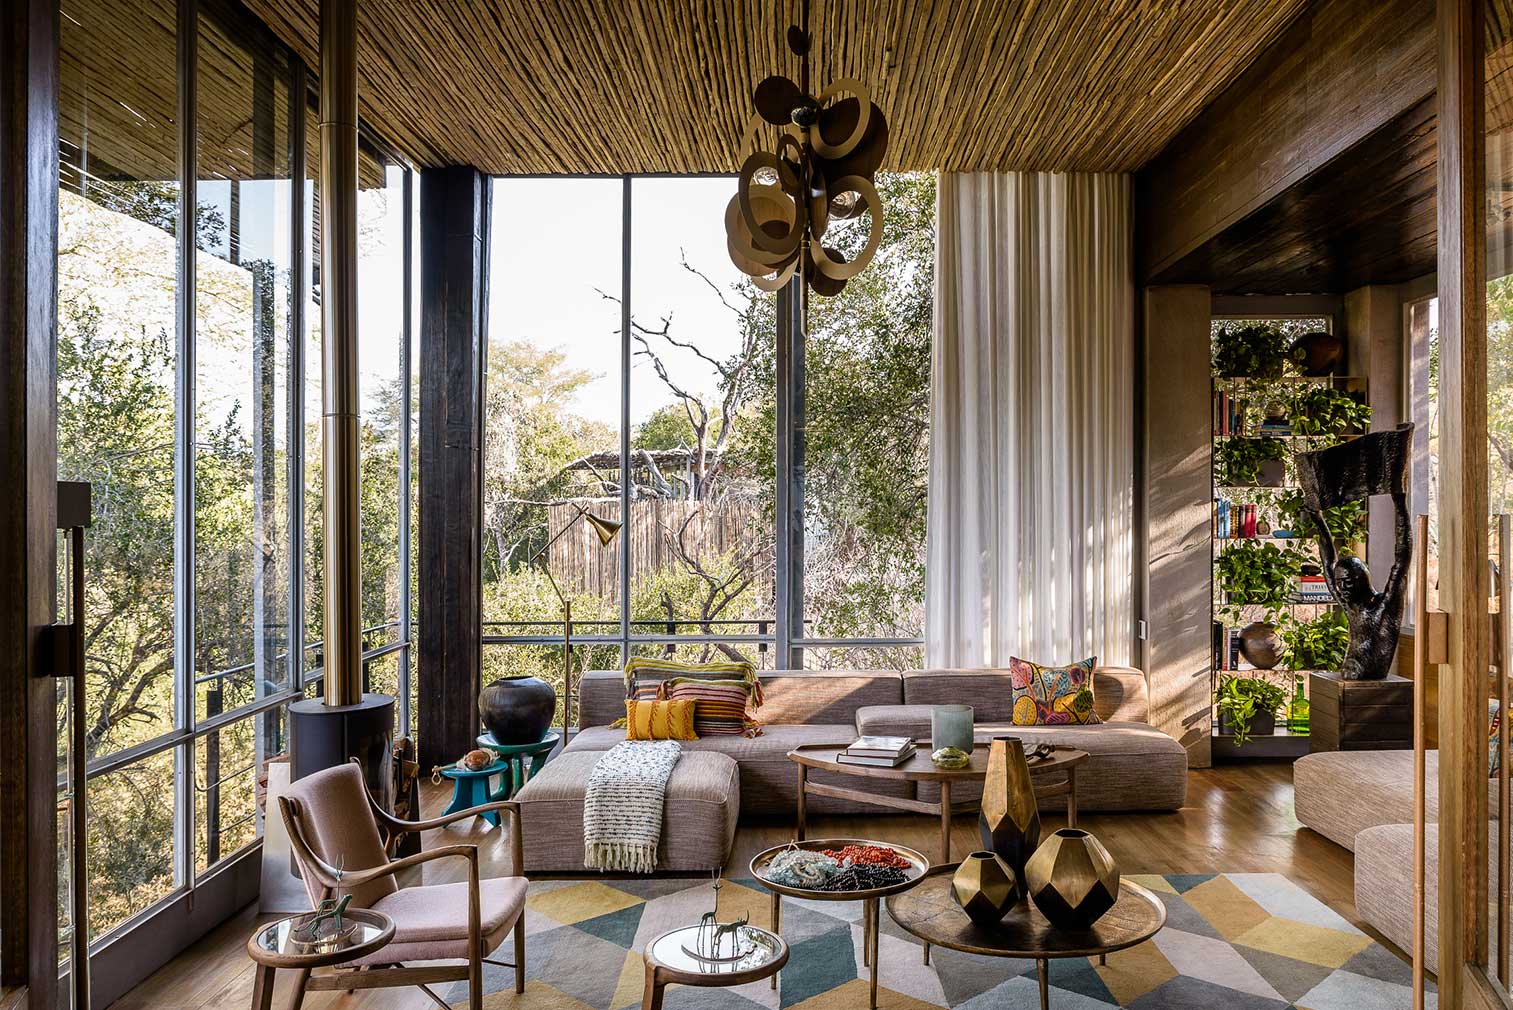 Singita Sweni safari lodge in South Africa, designed by Cecile and Boyd